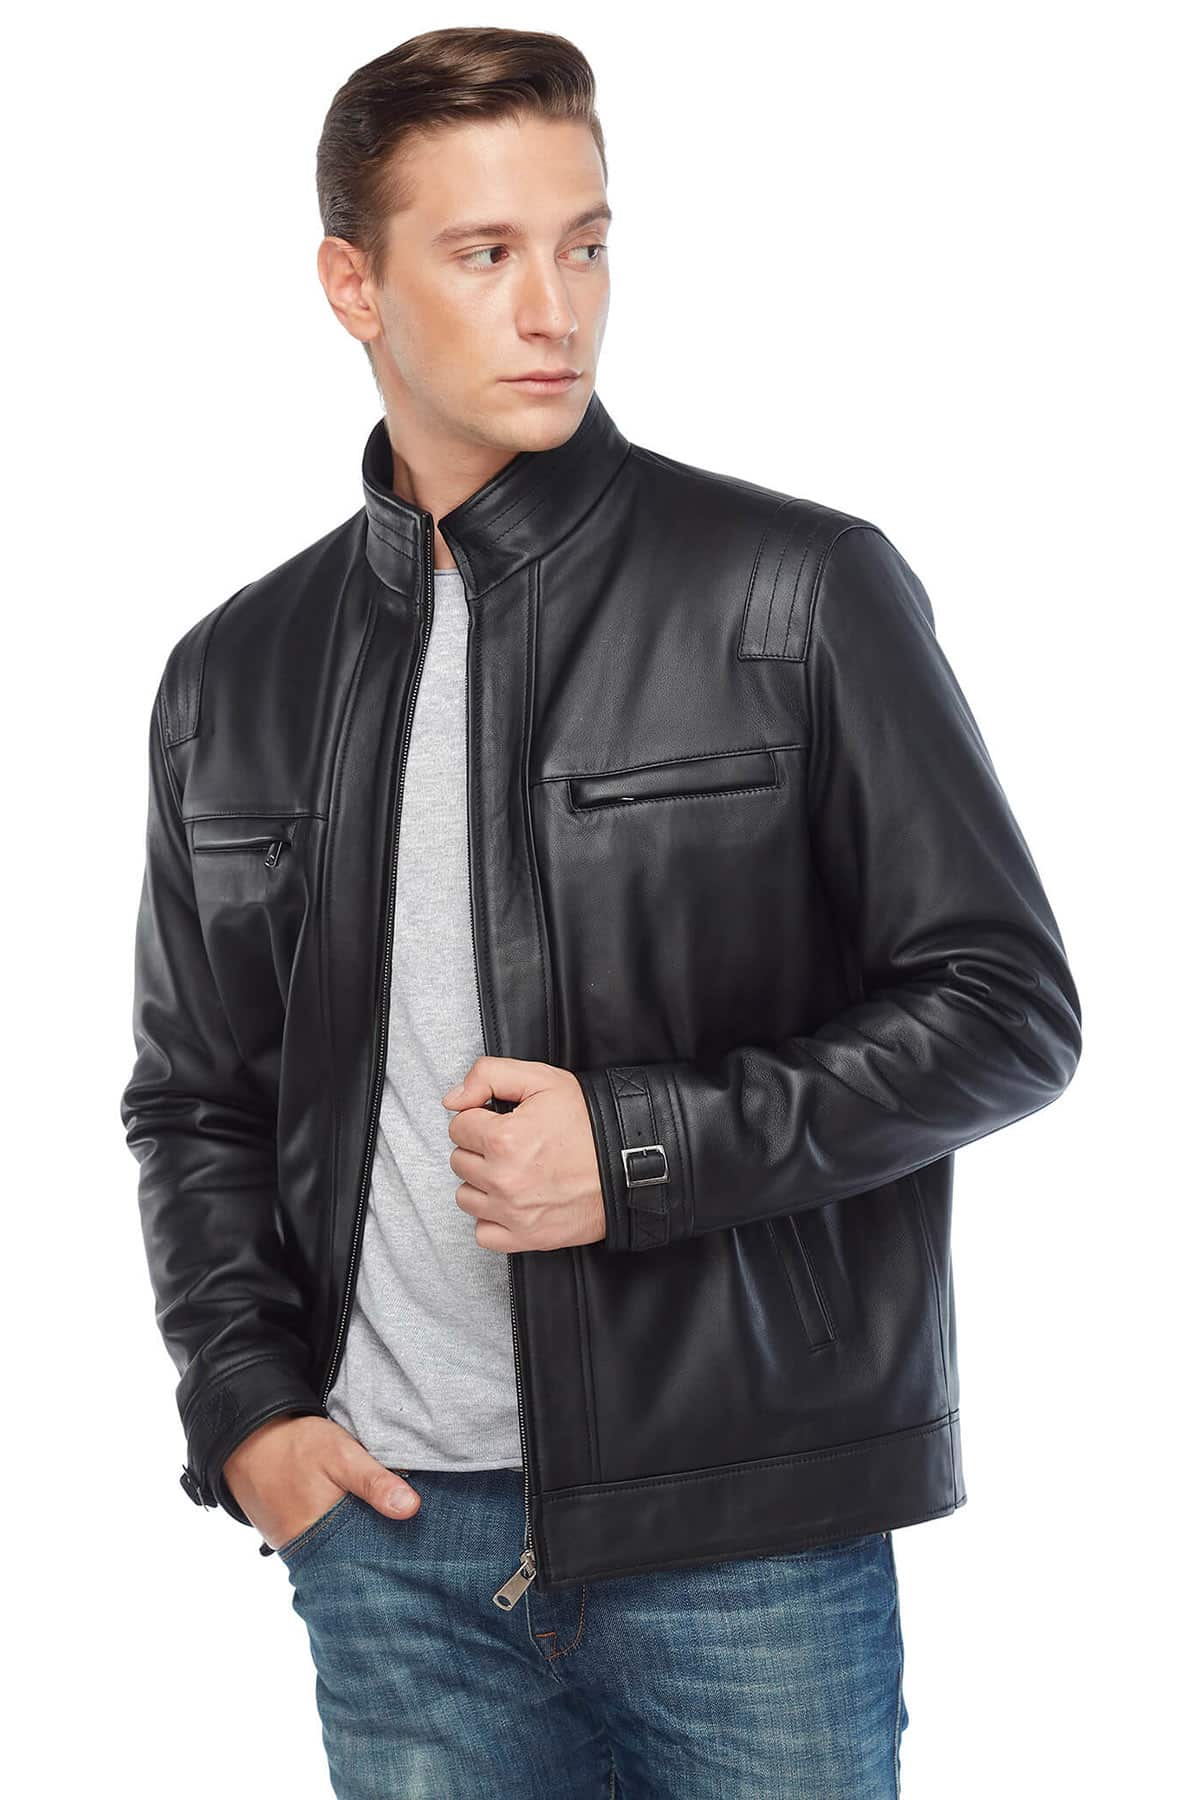 Jesse Wood Men's 100 % Real Black Leather Jacket